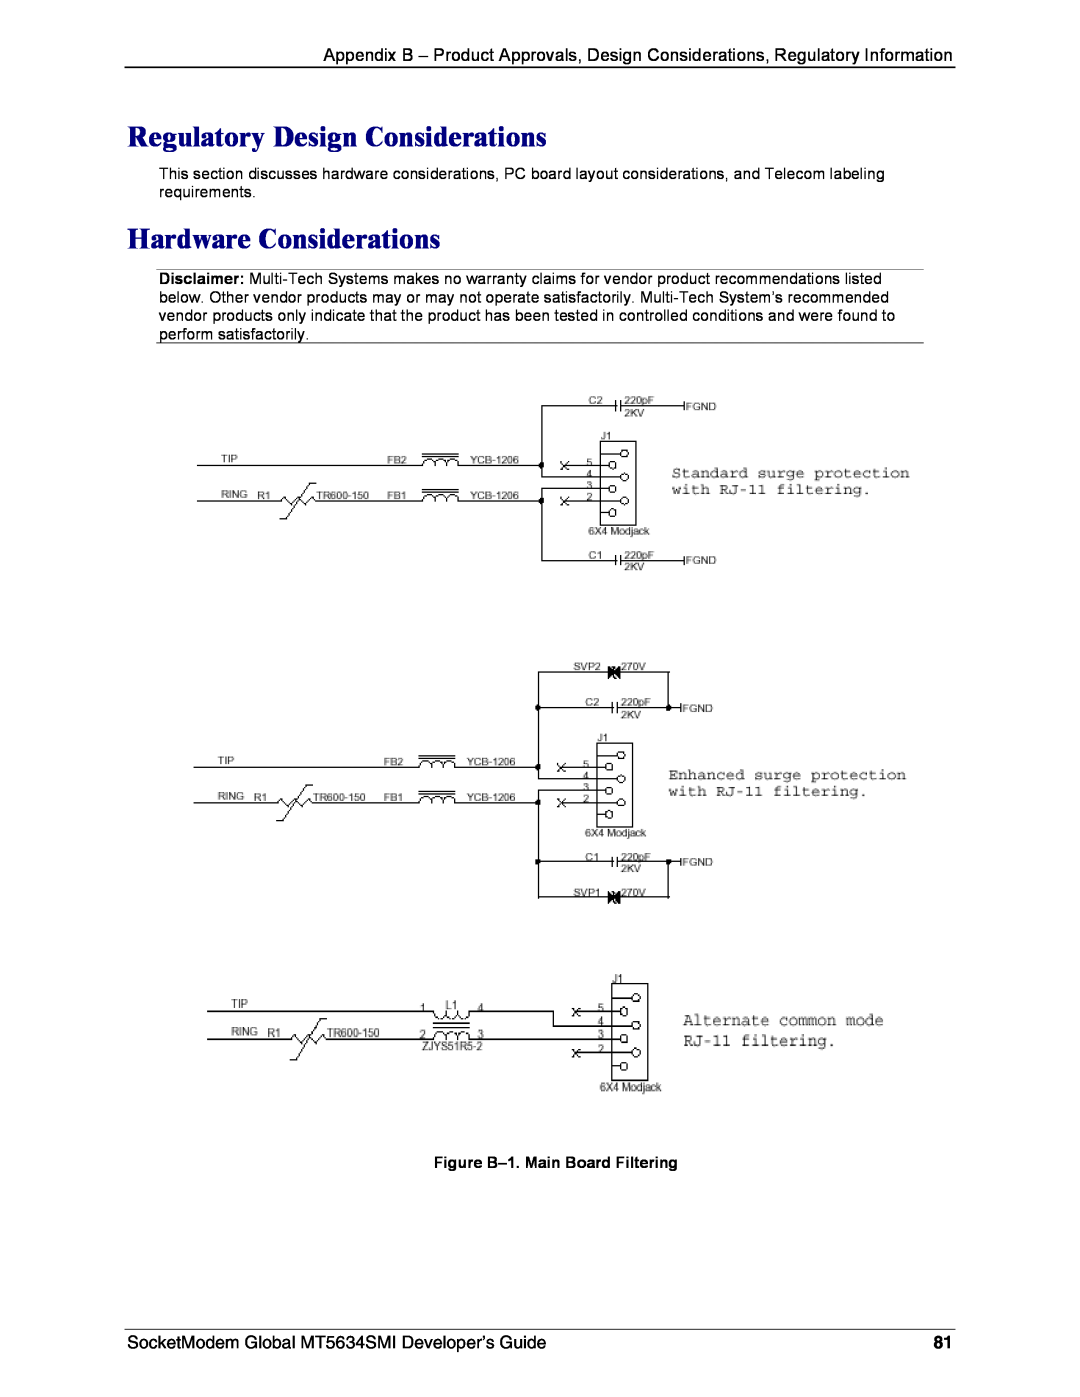 Technics MT5634SMI-34 manual Regulatory Design Considerations, Hardware Considerations, Figure B-1. Main Board Filtering 